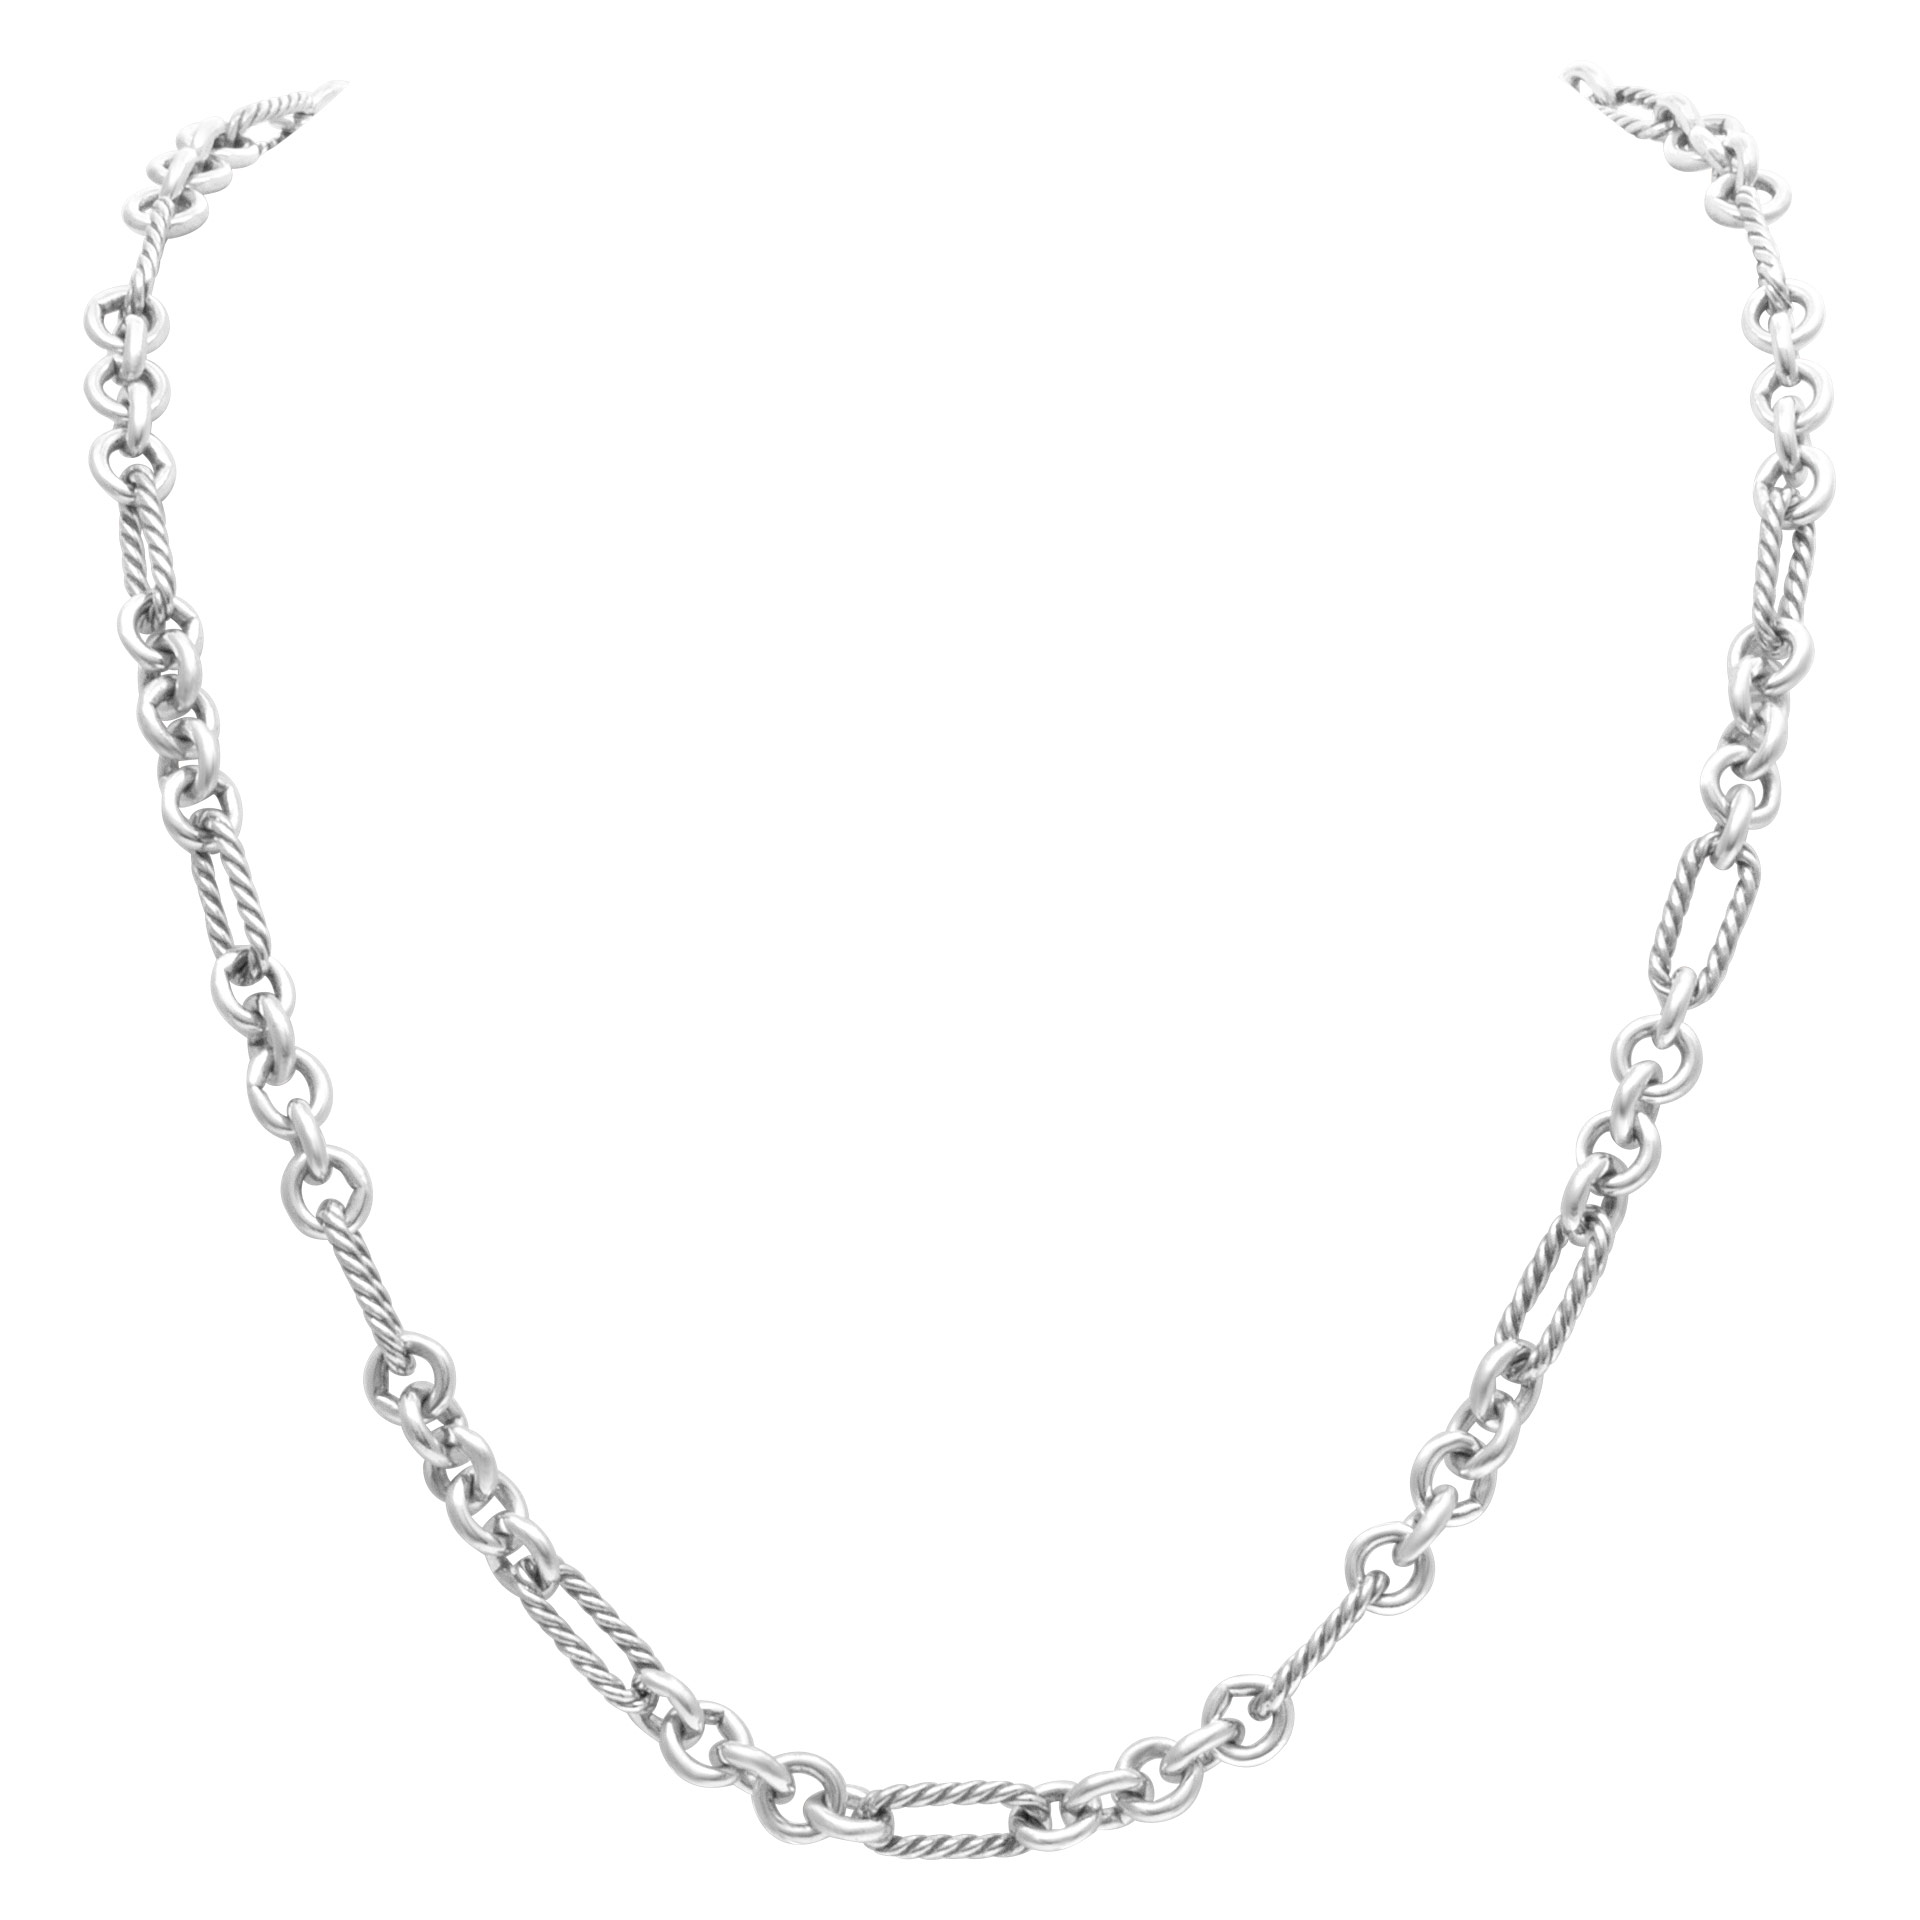 David Yurman Figaro necklace in sterling silver